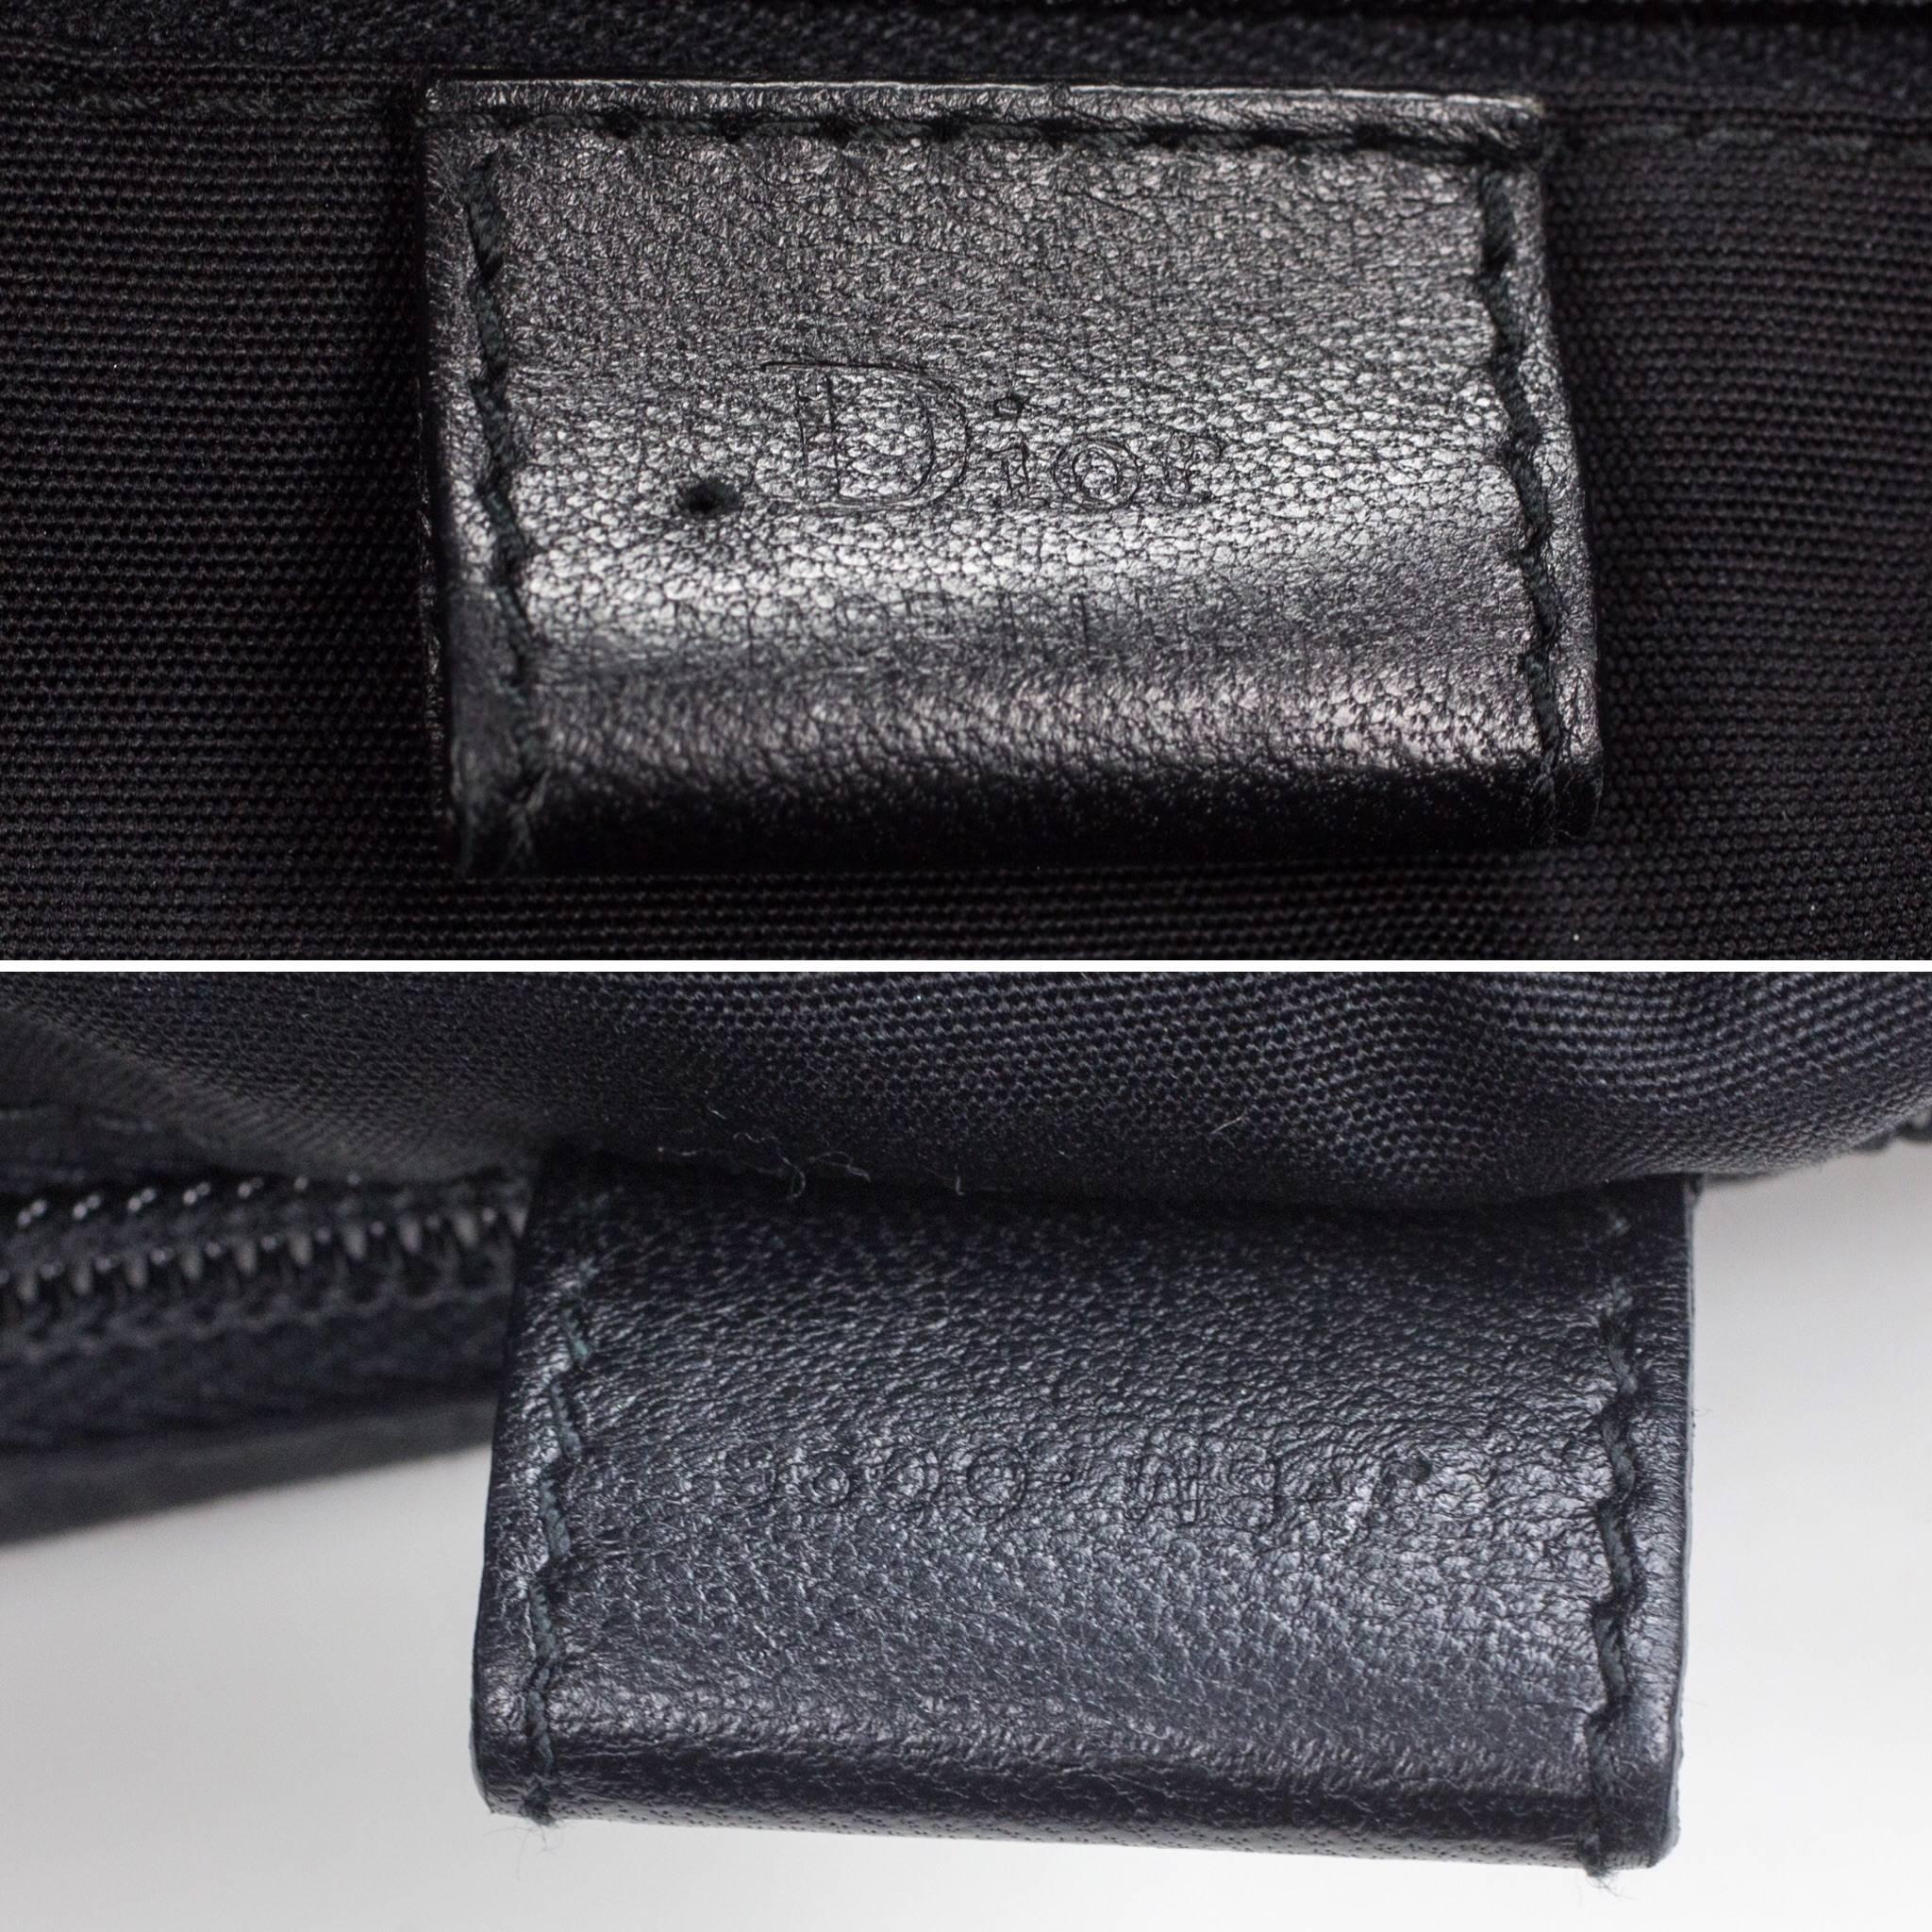 Dior Homme Duffle Leather Bag - Black Tassel Weekend Travel Gym Delville Hedi 3